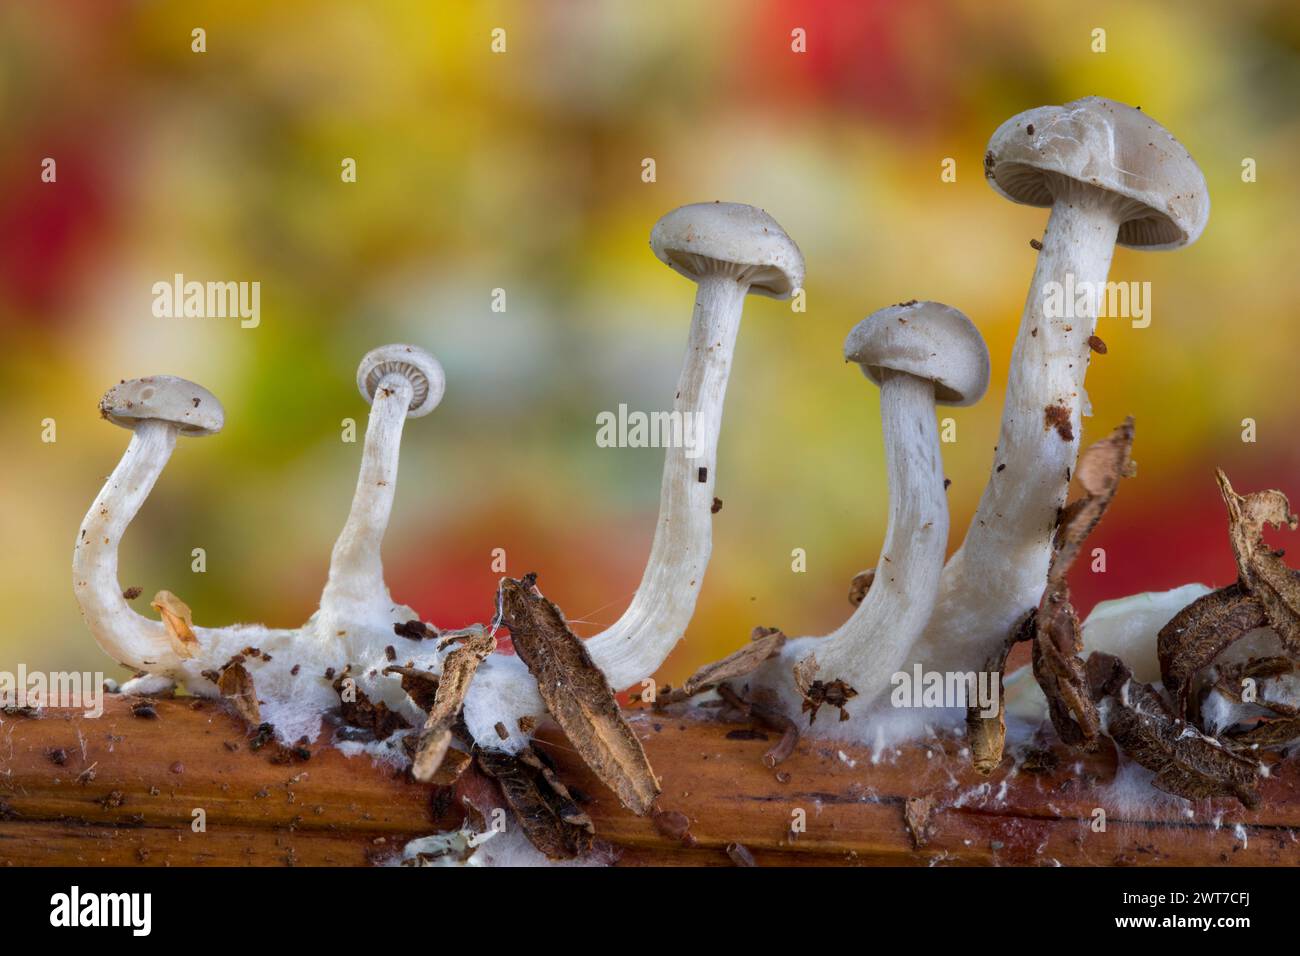 Small cap fungi fruiting bodies on a bracken stem in Autumn. Powys, Wales. November. Stock Photo